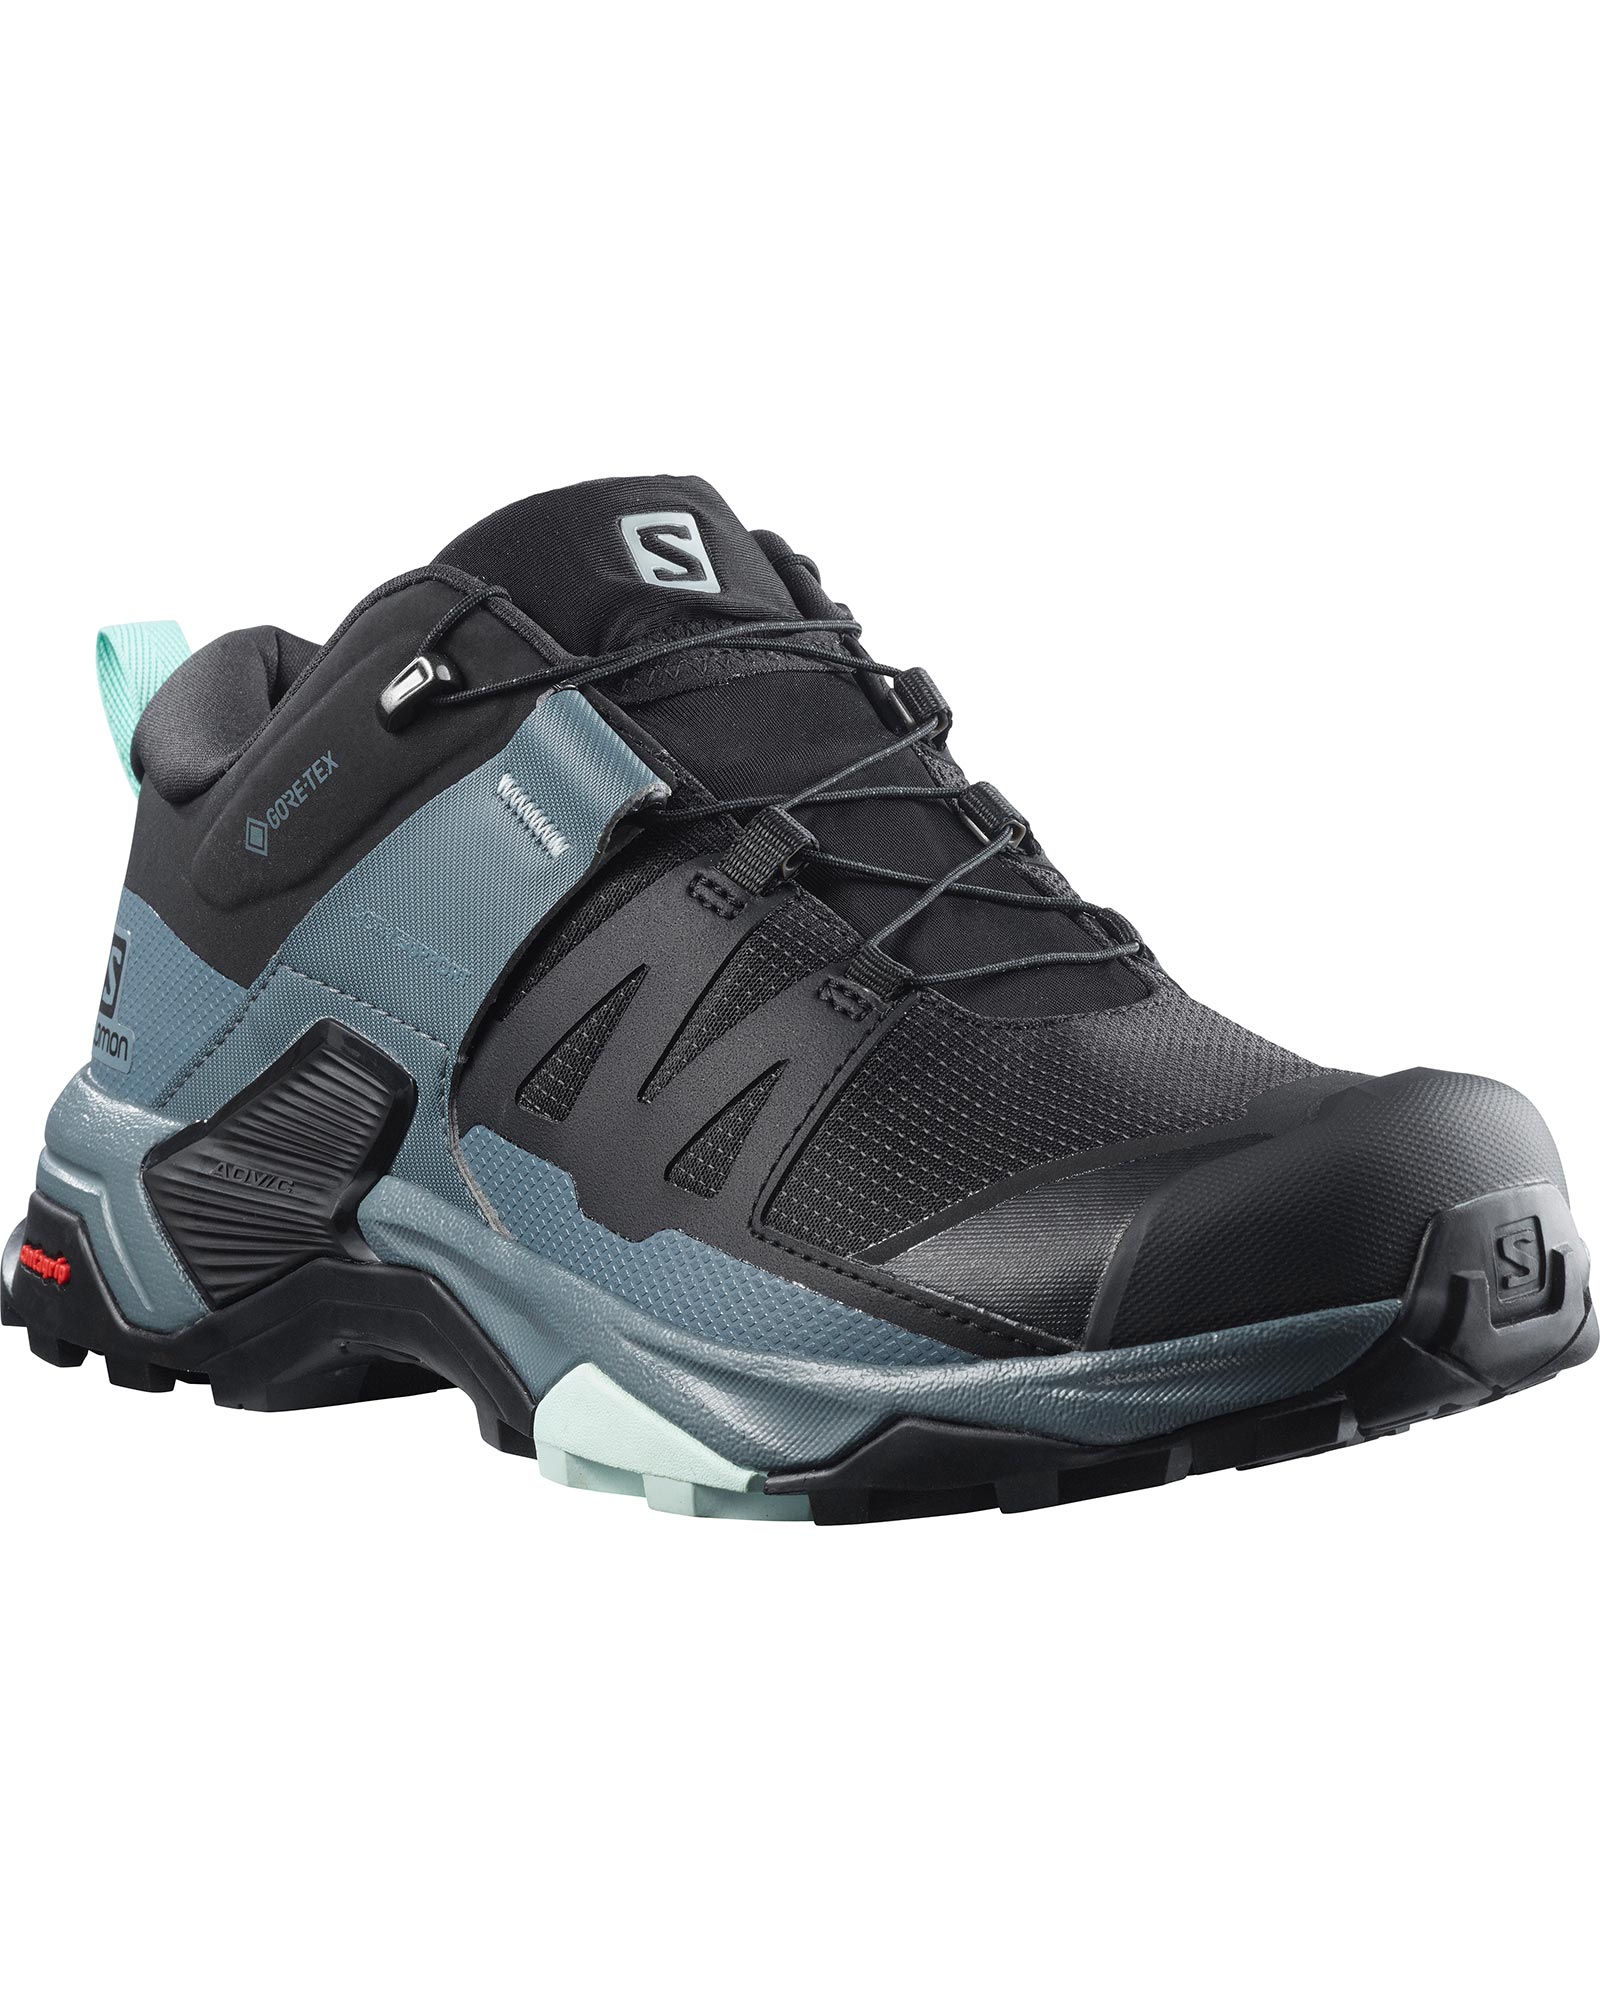 Salomon X Ultra 4 GORE TEX Women’s Shoes - Black/Stormy Weather/Opal Blue UK 4.5